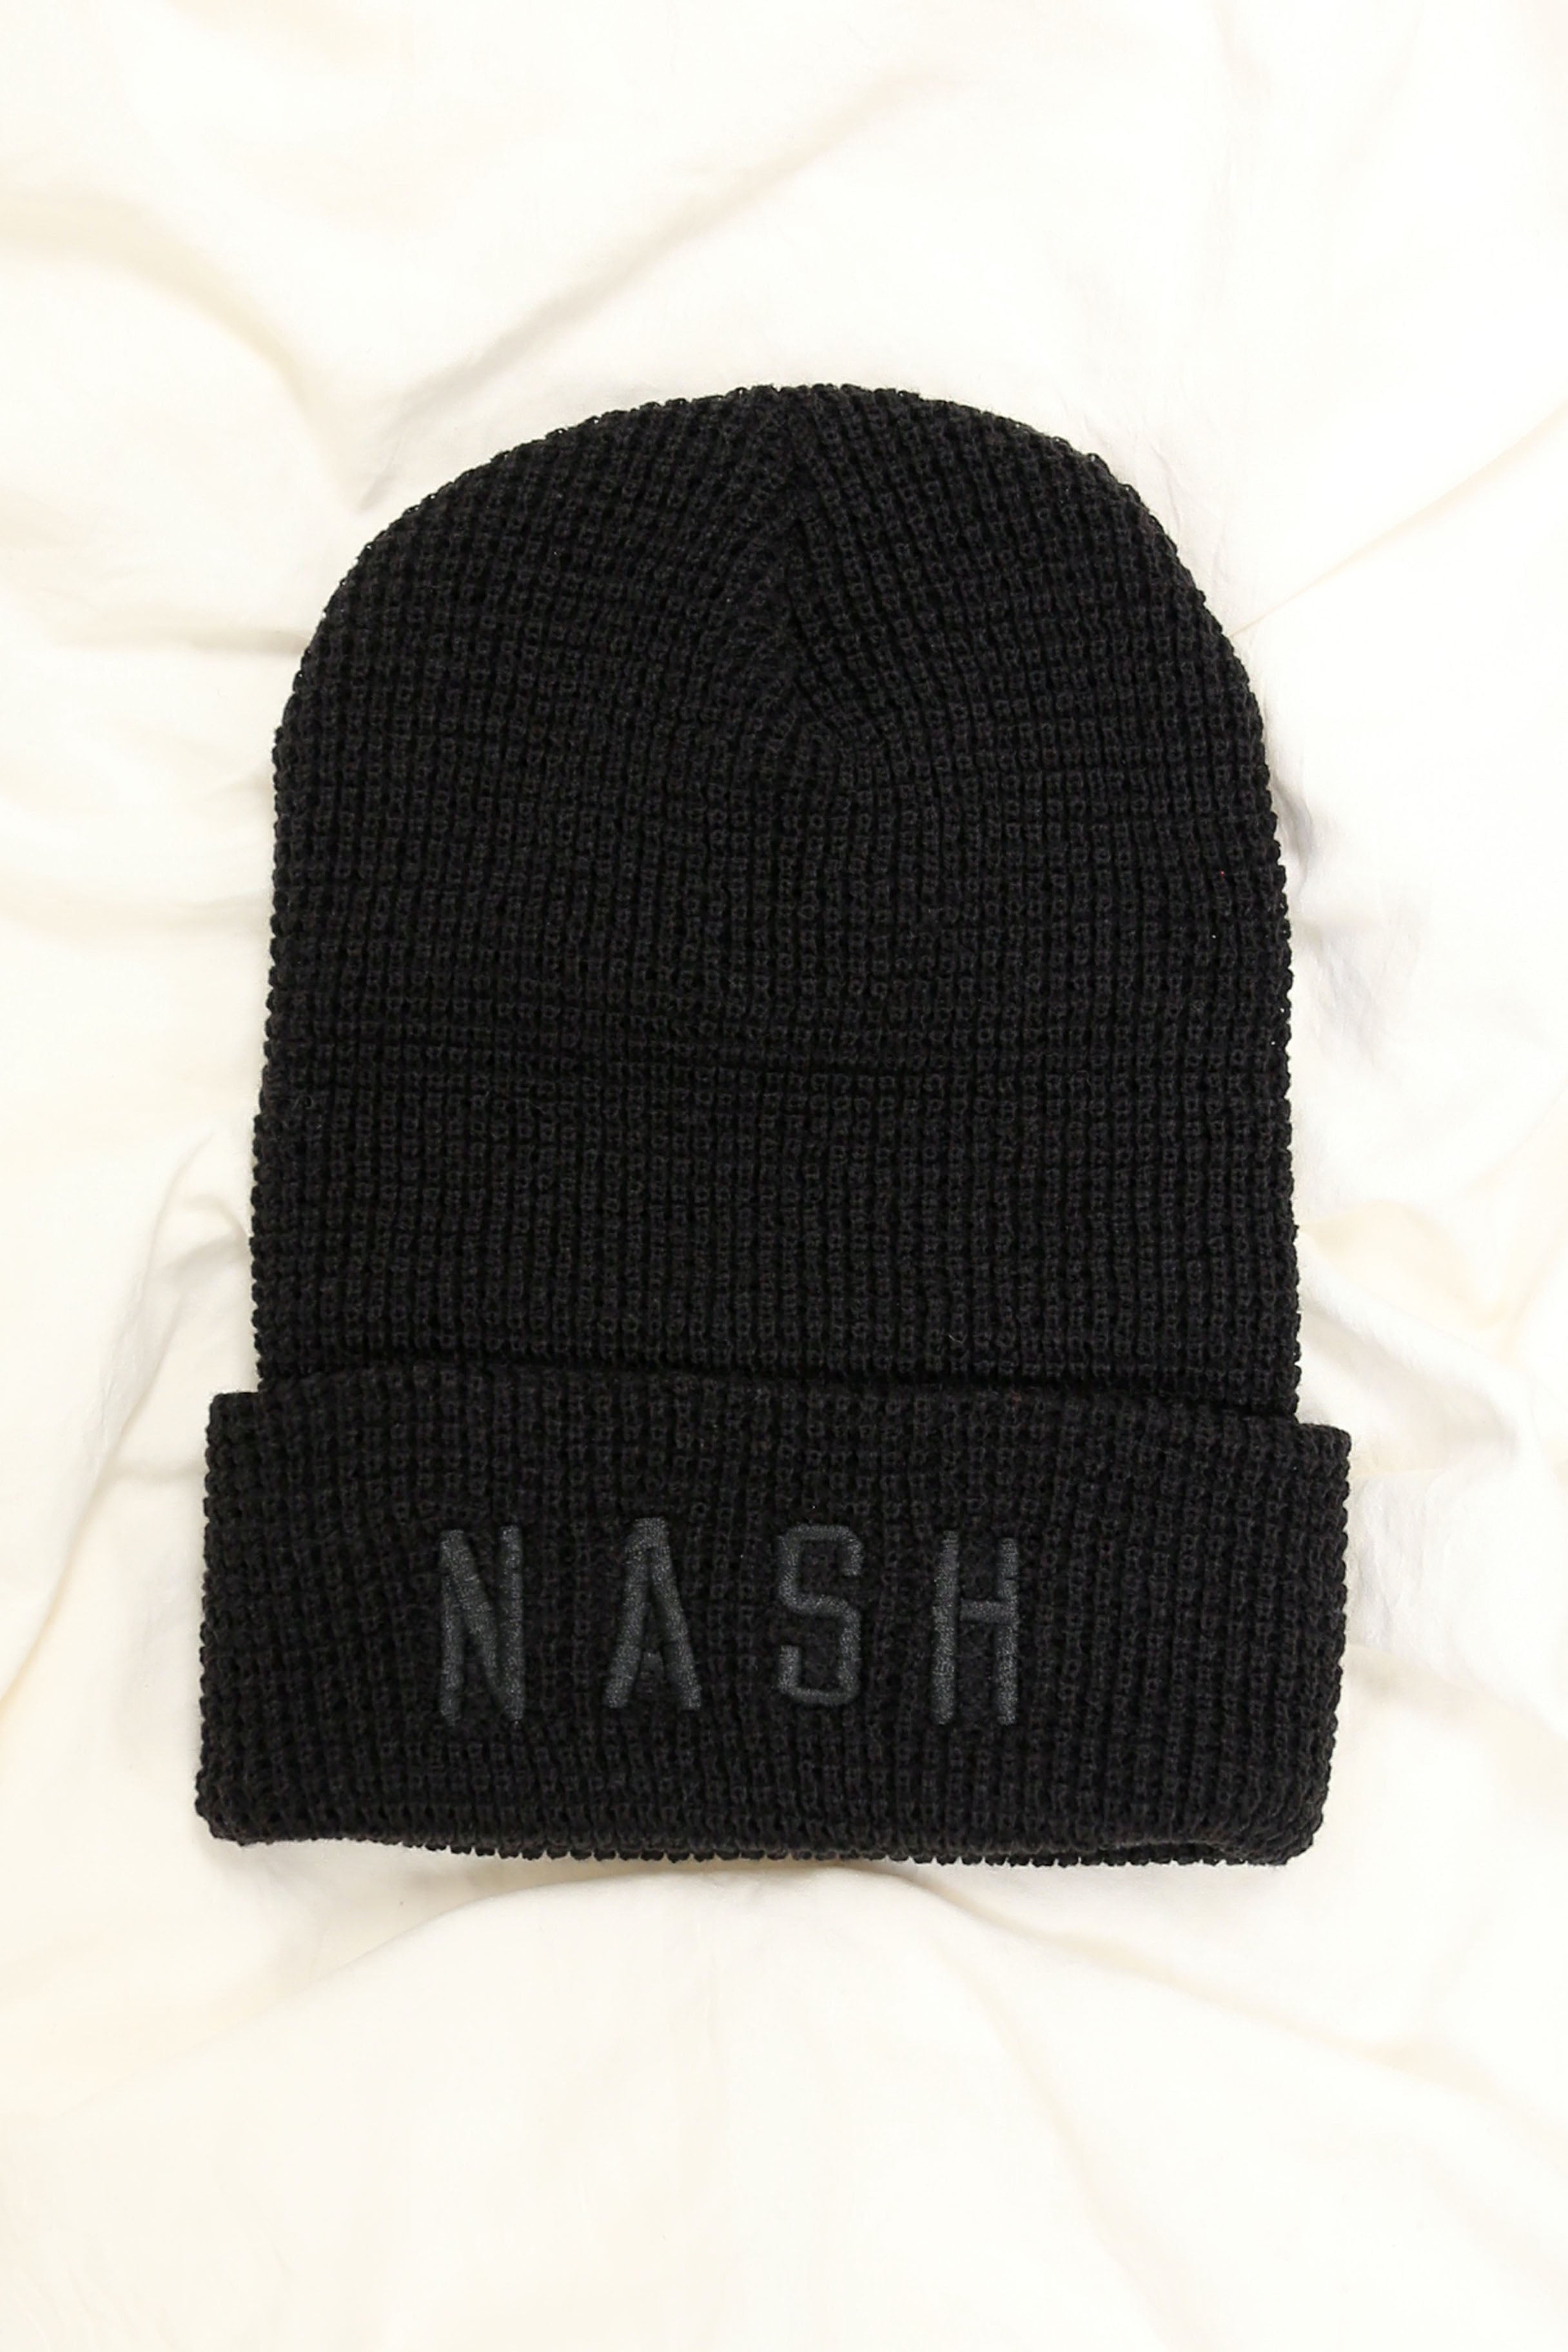 NASH Waffle Knit Beanie [Black]